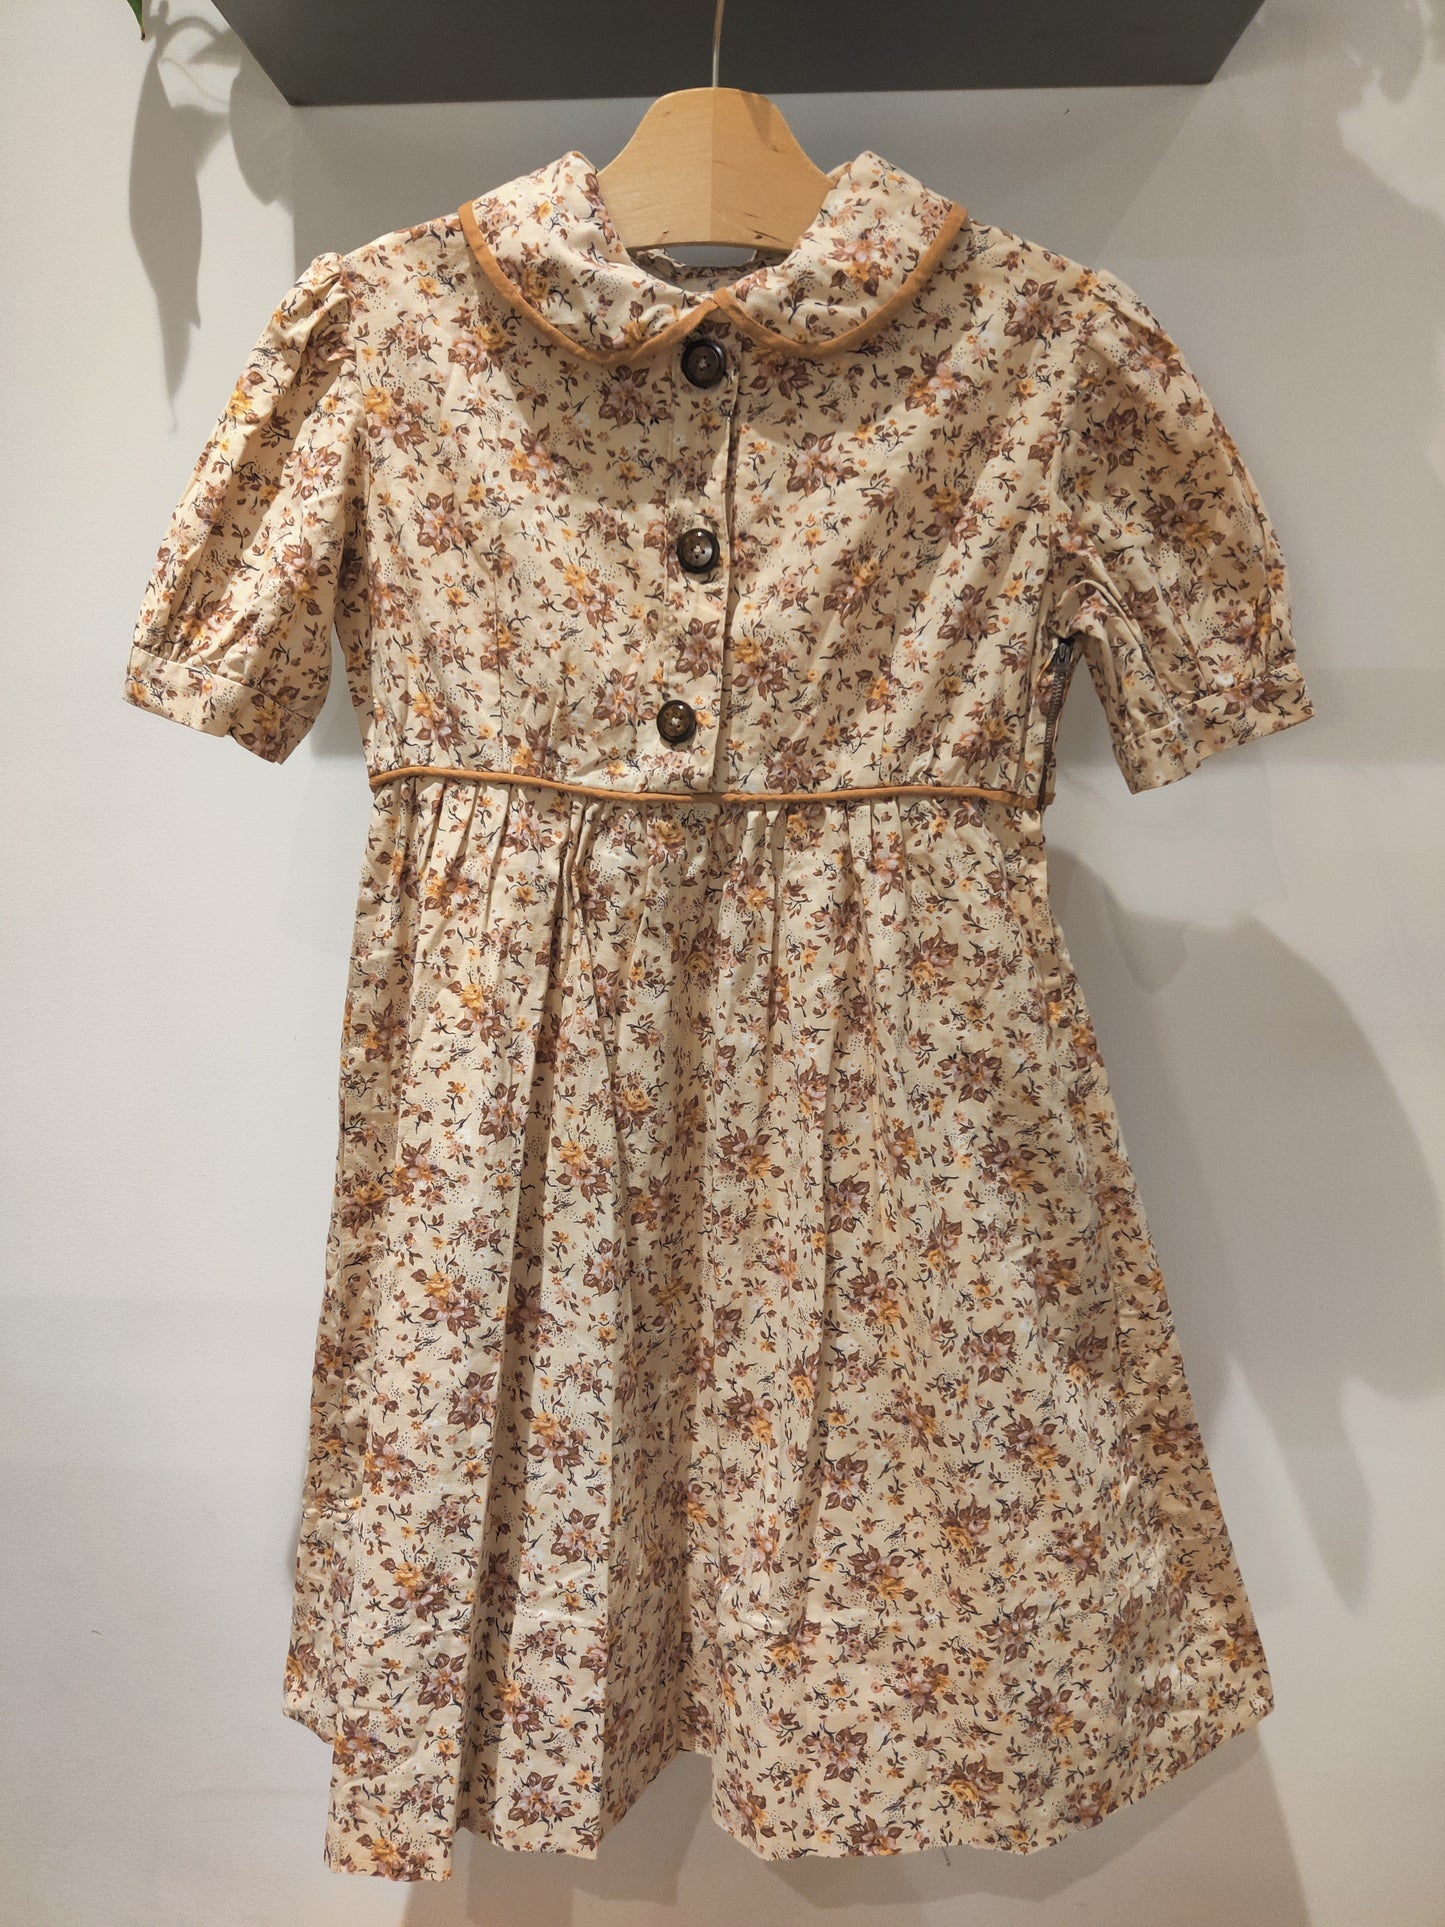 Ditzy print floral dress vintage age 6